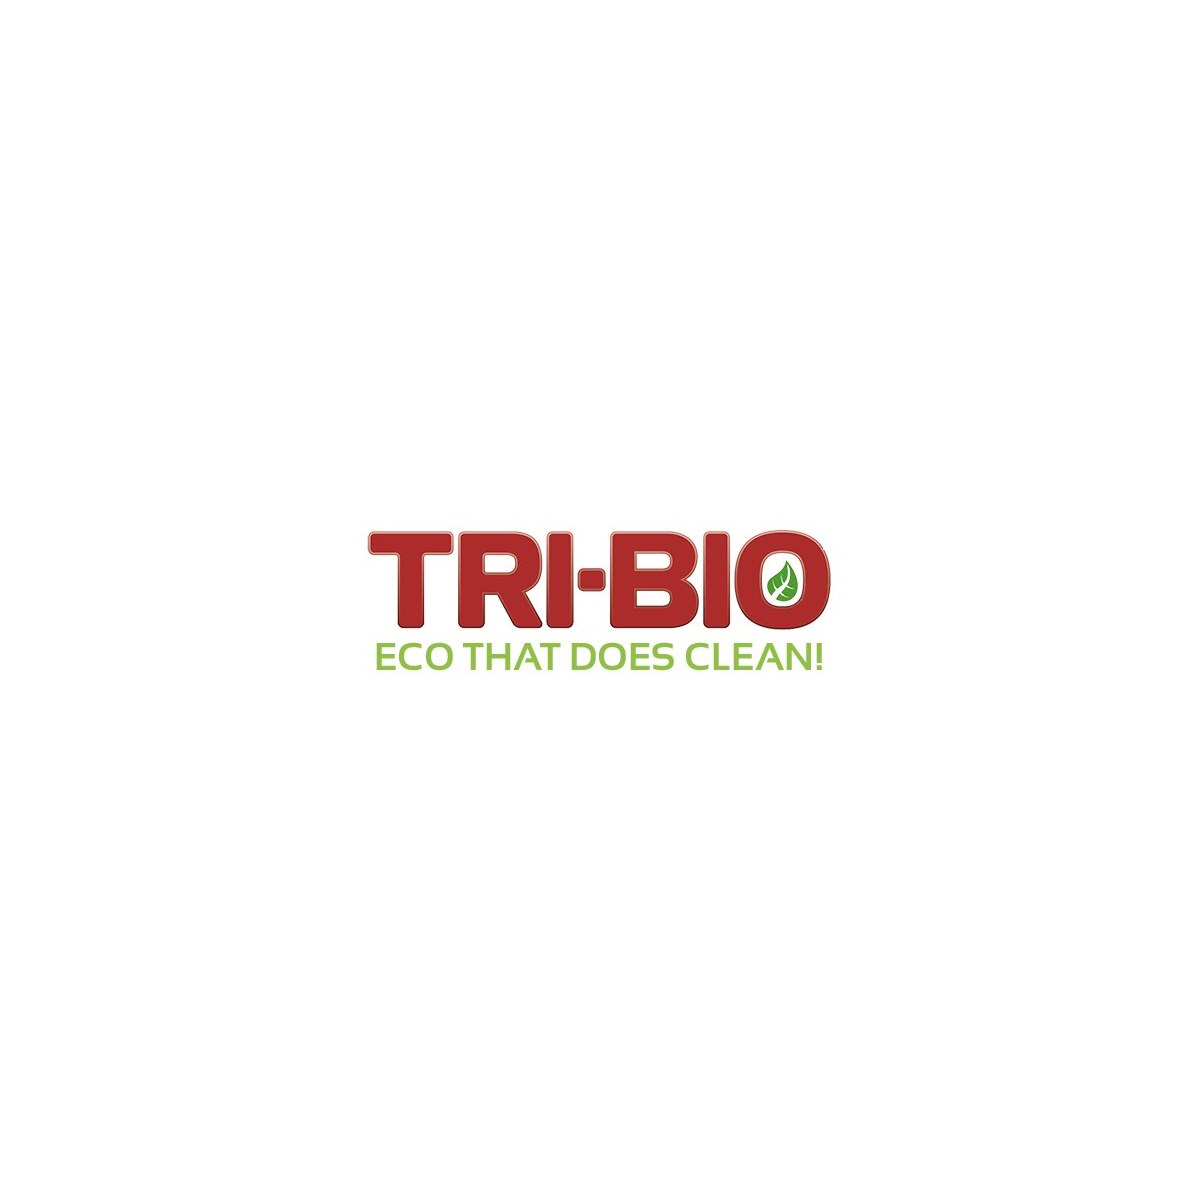 Tri-Bio Products